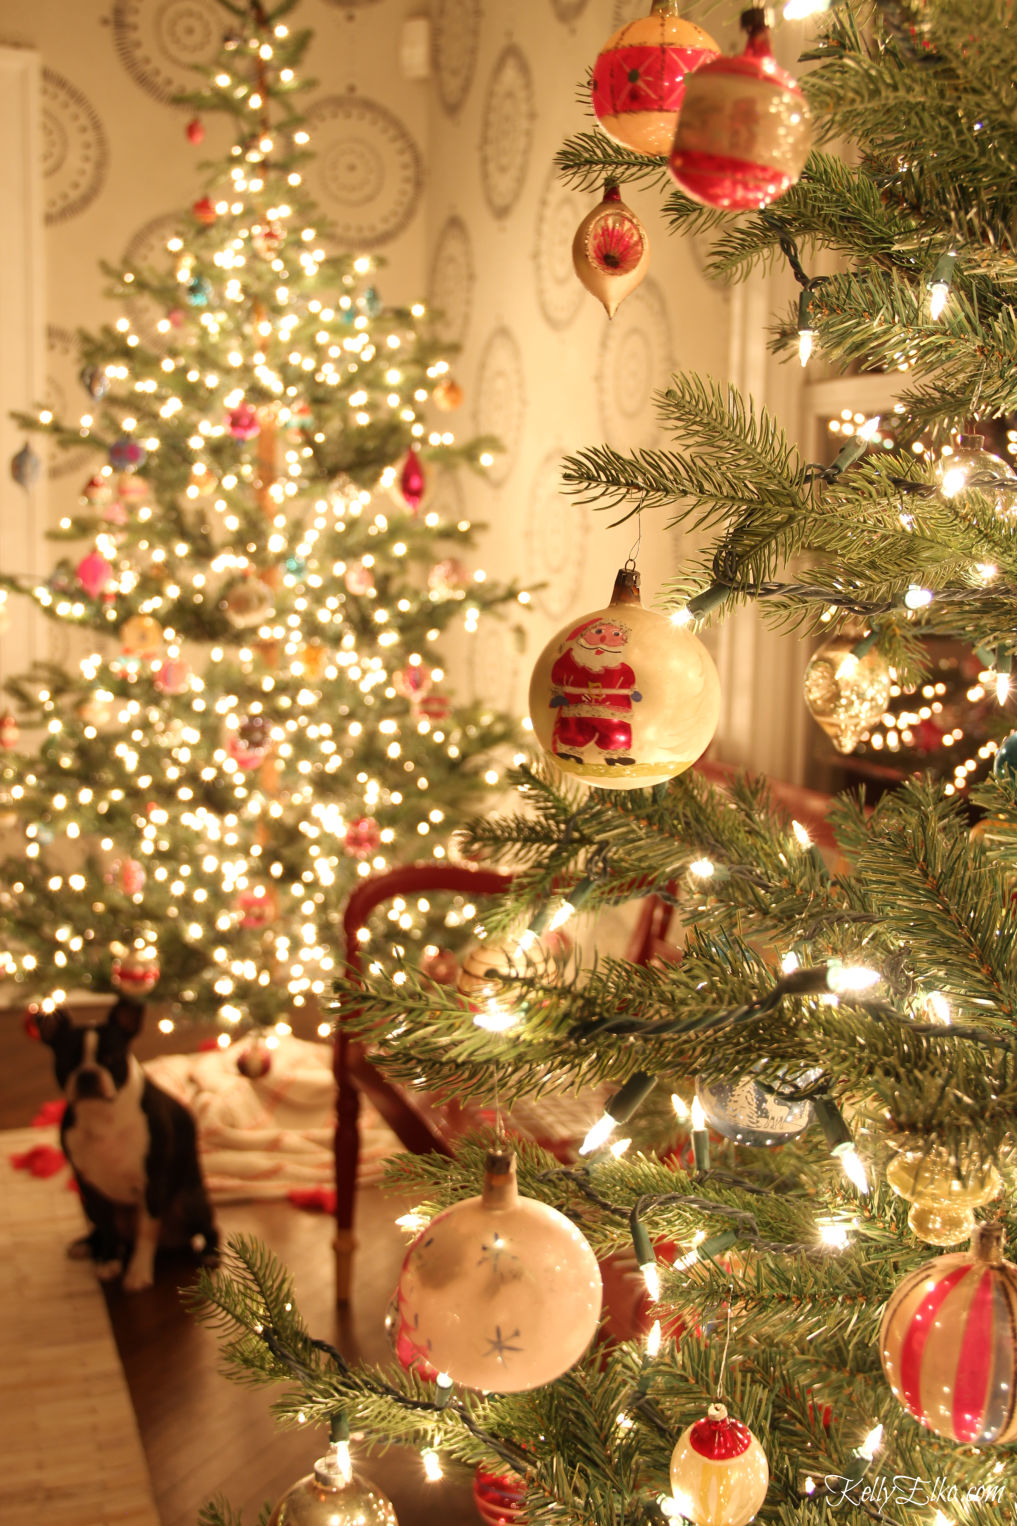 Tour this stunning Christmas home at night - it positively glows kellyelko.com #christmas #christmslights #christmasdecor #christmasdecorating #shinybrite #christmasdiningroom #vintagechristmas #retrochristmas #christmastrees